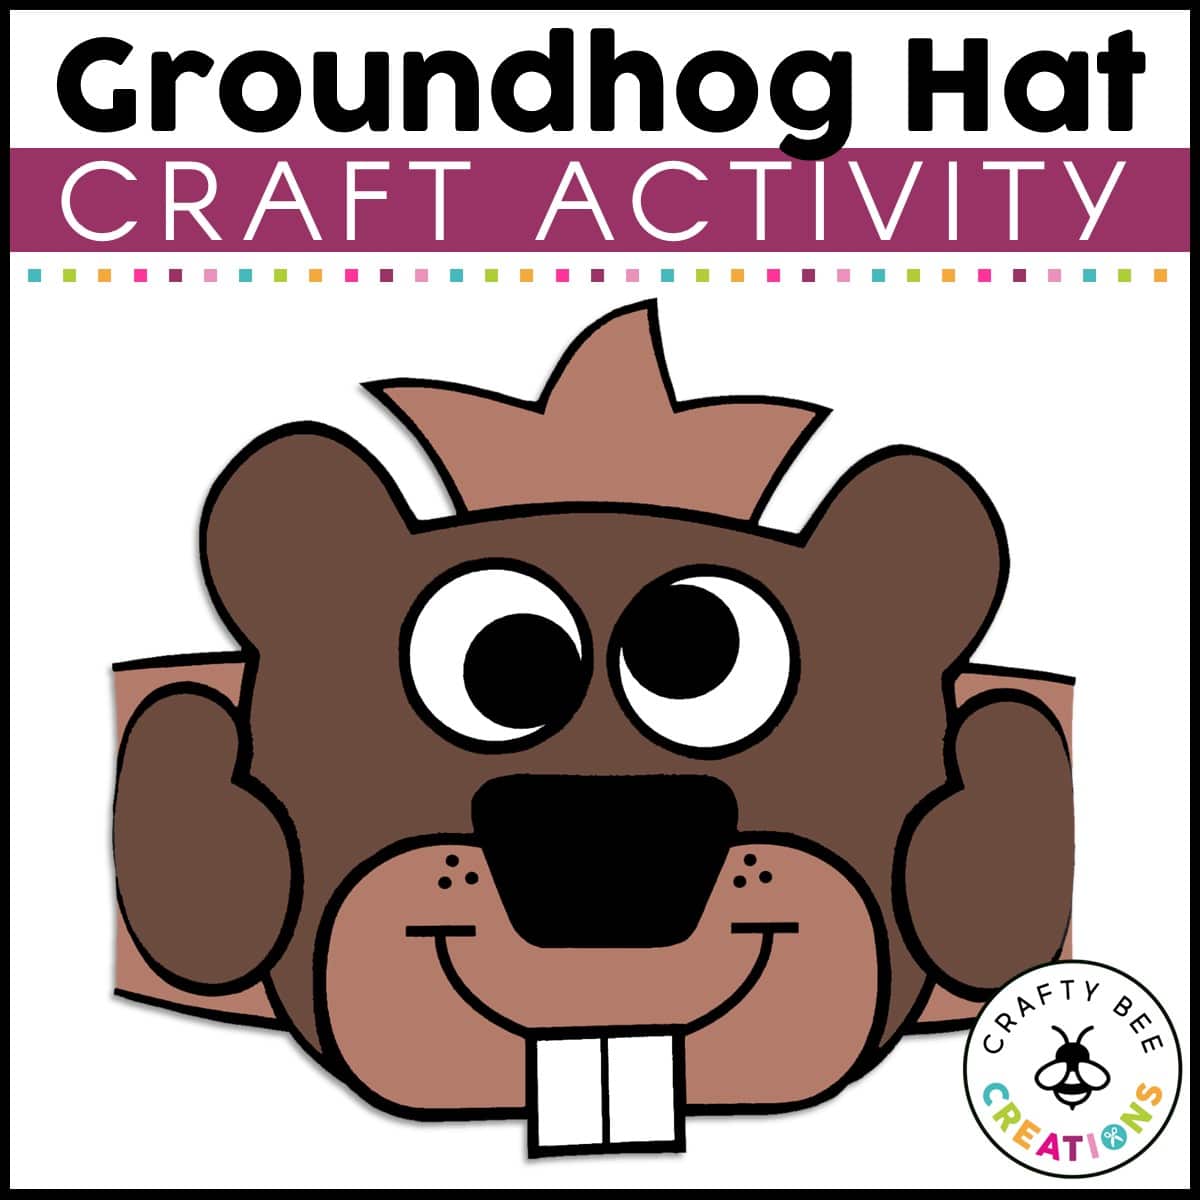 Groundhog Day Hat Craft Activity - Crafty Bee Creations